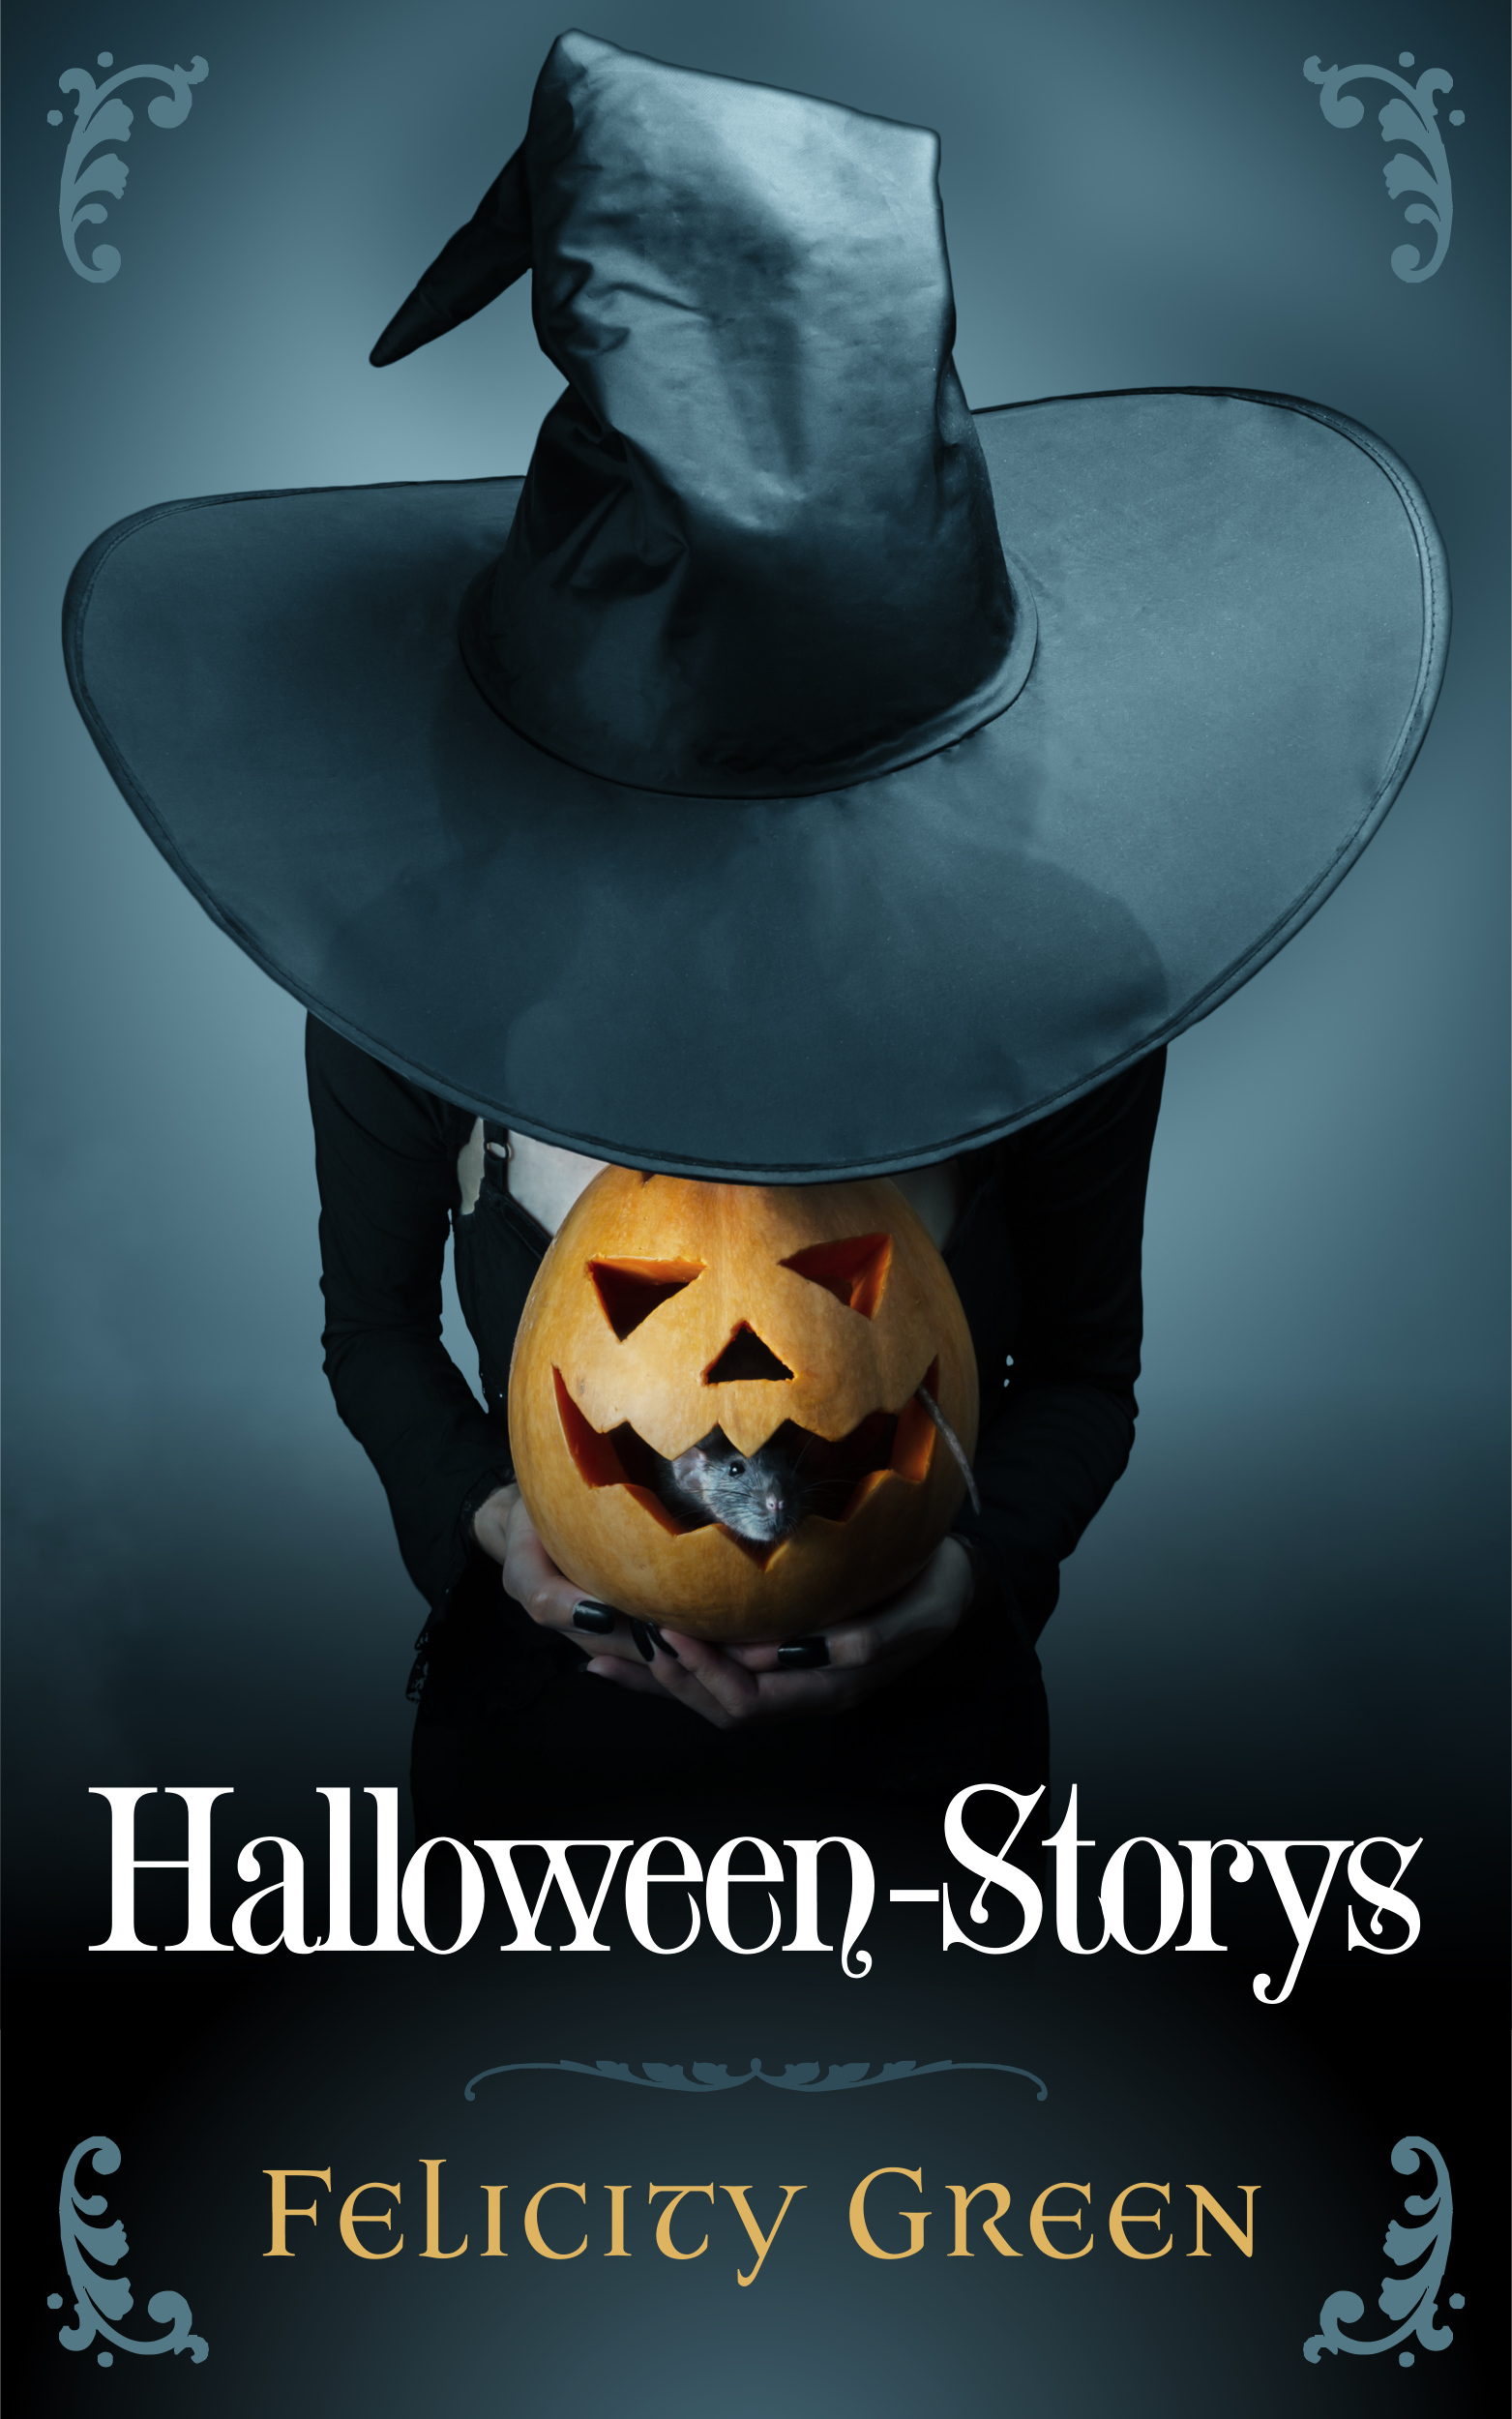 Felicity Greens Halloween-Storys